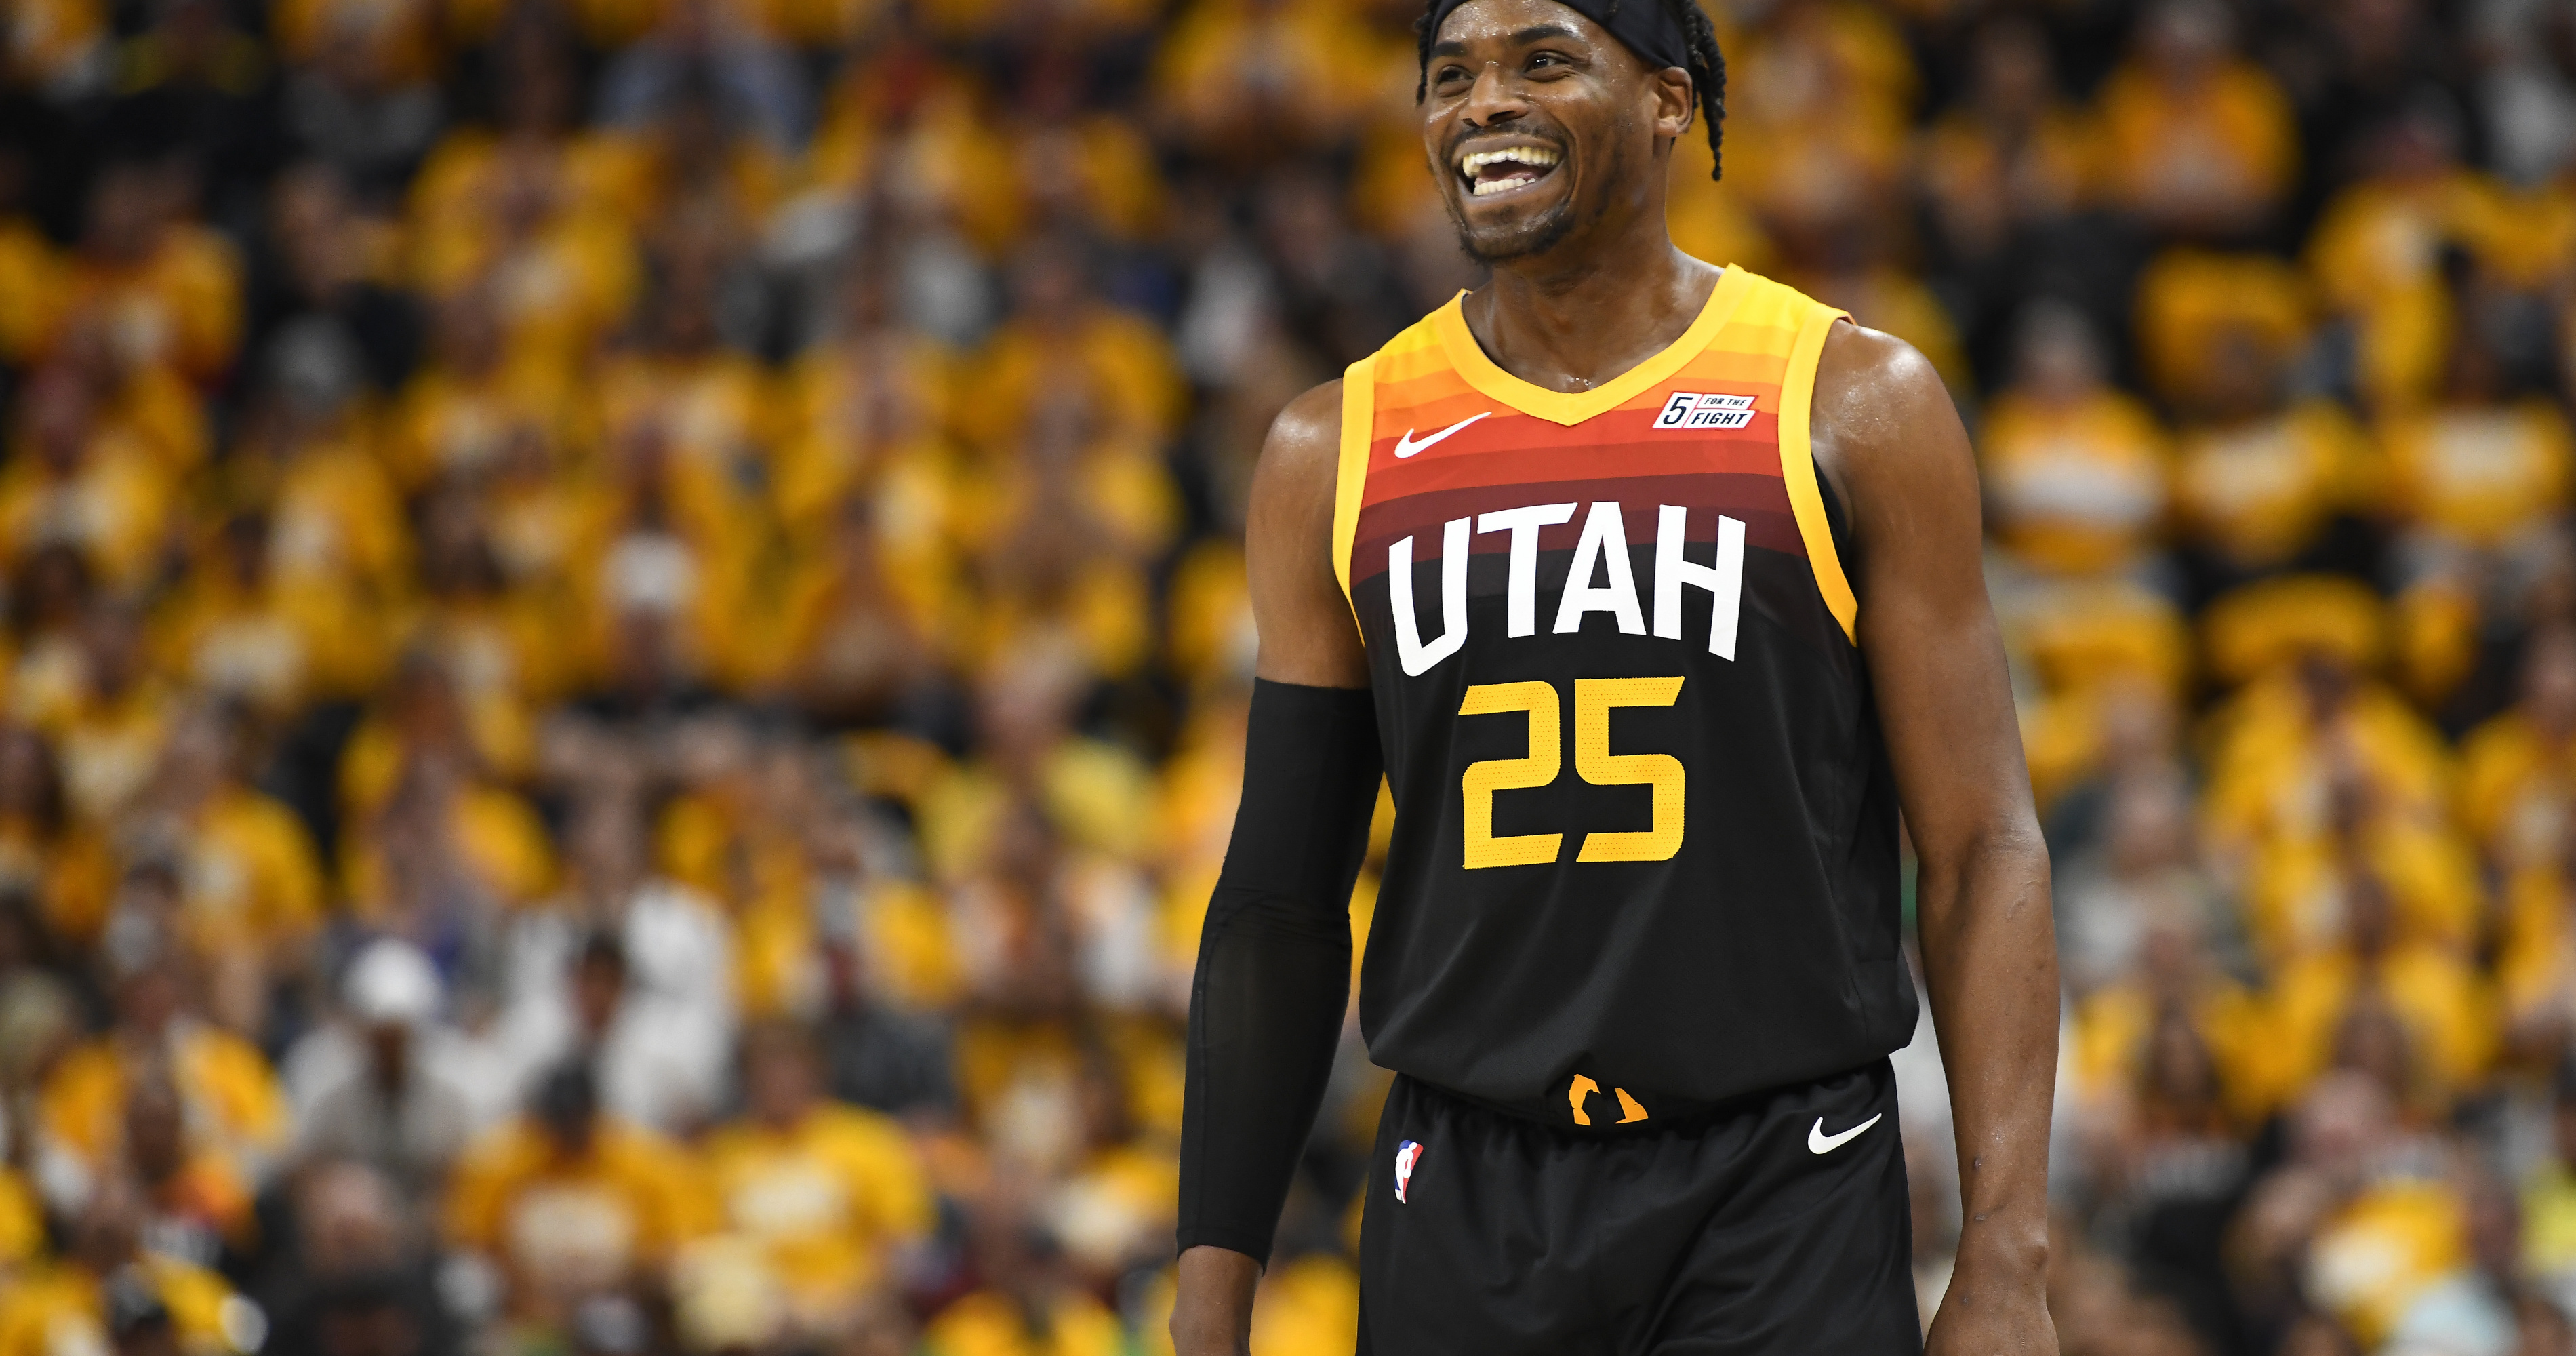 Utah Jazz Orange NBA Jerseys for sale